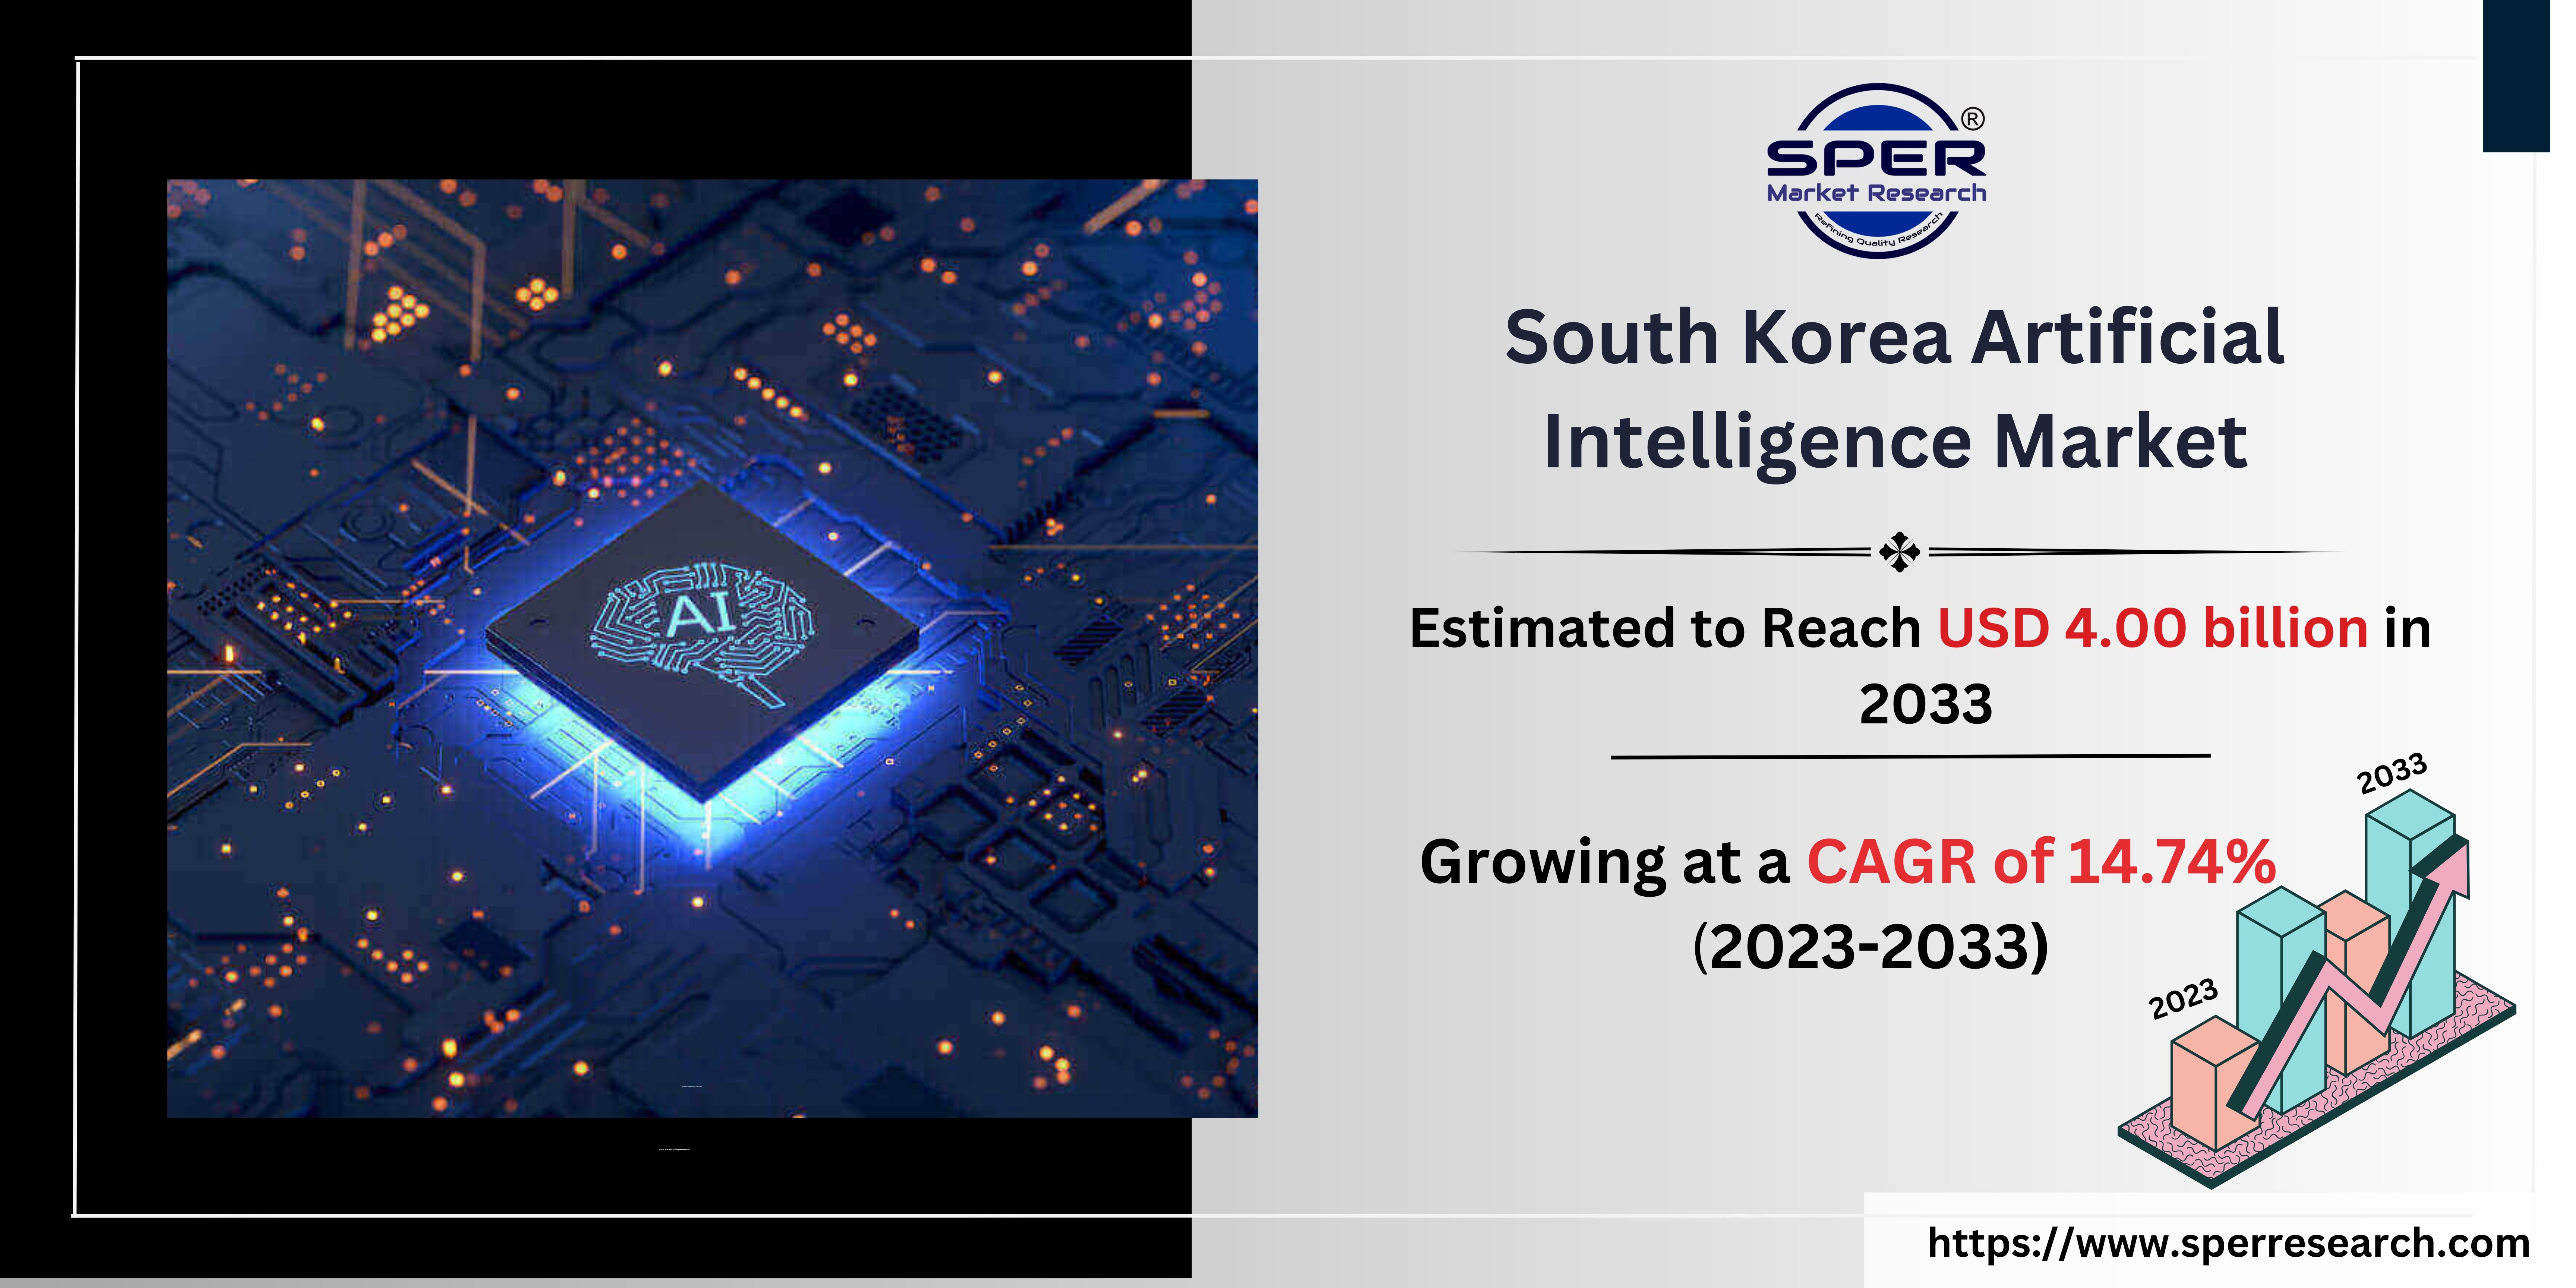 South Korea Artificial Intelligence Market